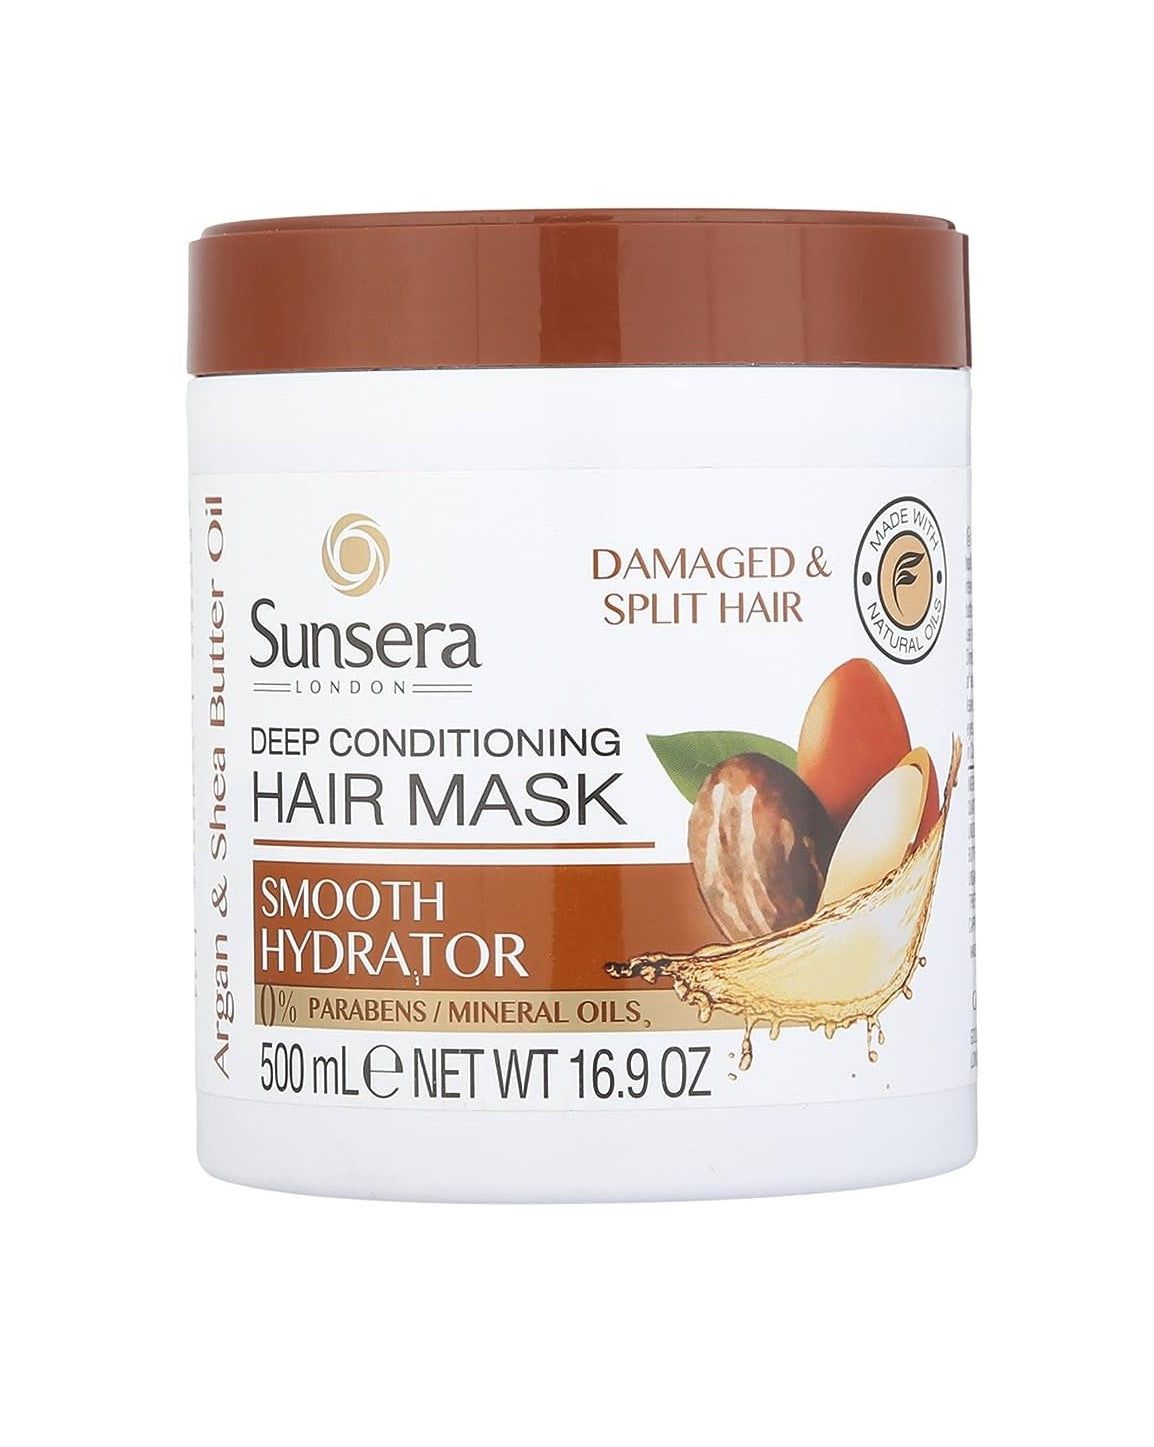 Sunsera Deep Conditioning Hair Mask with Argan & Shea Butter Oil for Damaged & Split Hair -500 ml